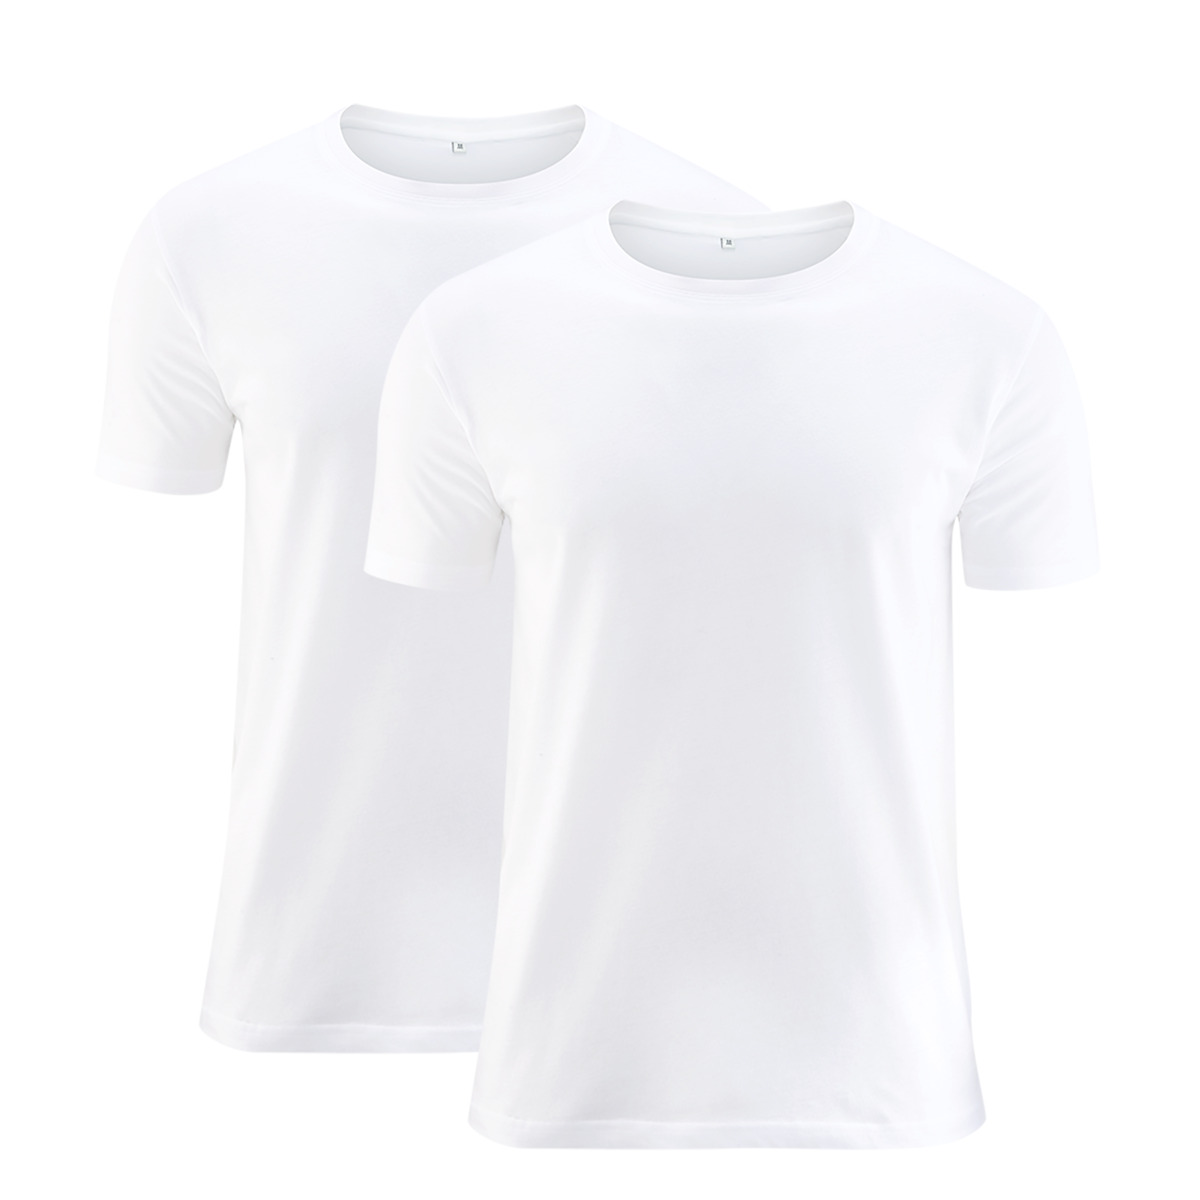 White T-shirt, pack of 2, 